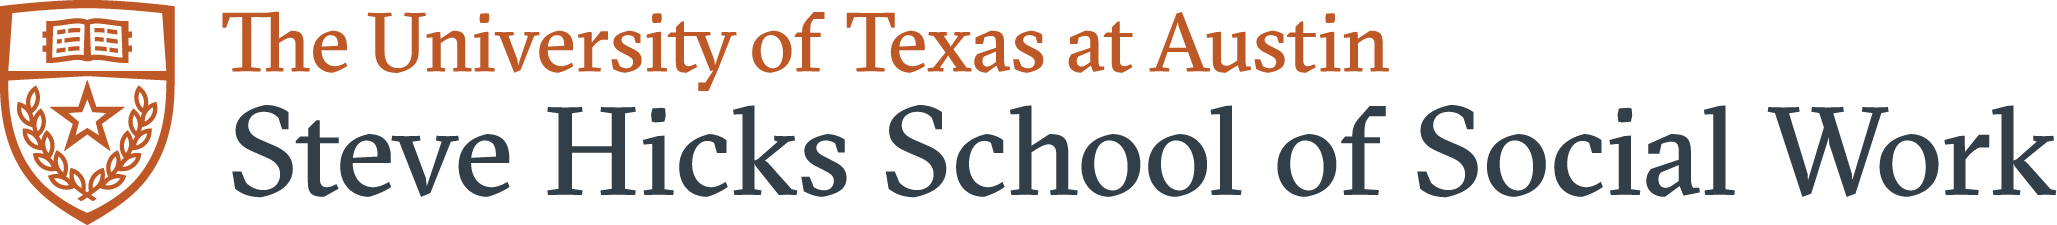 The University of Texas at Austin Steve Hicks School of Social Work